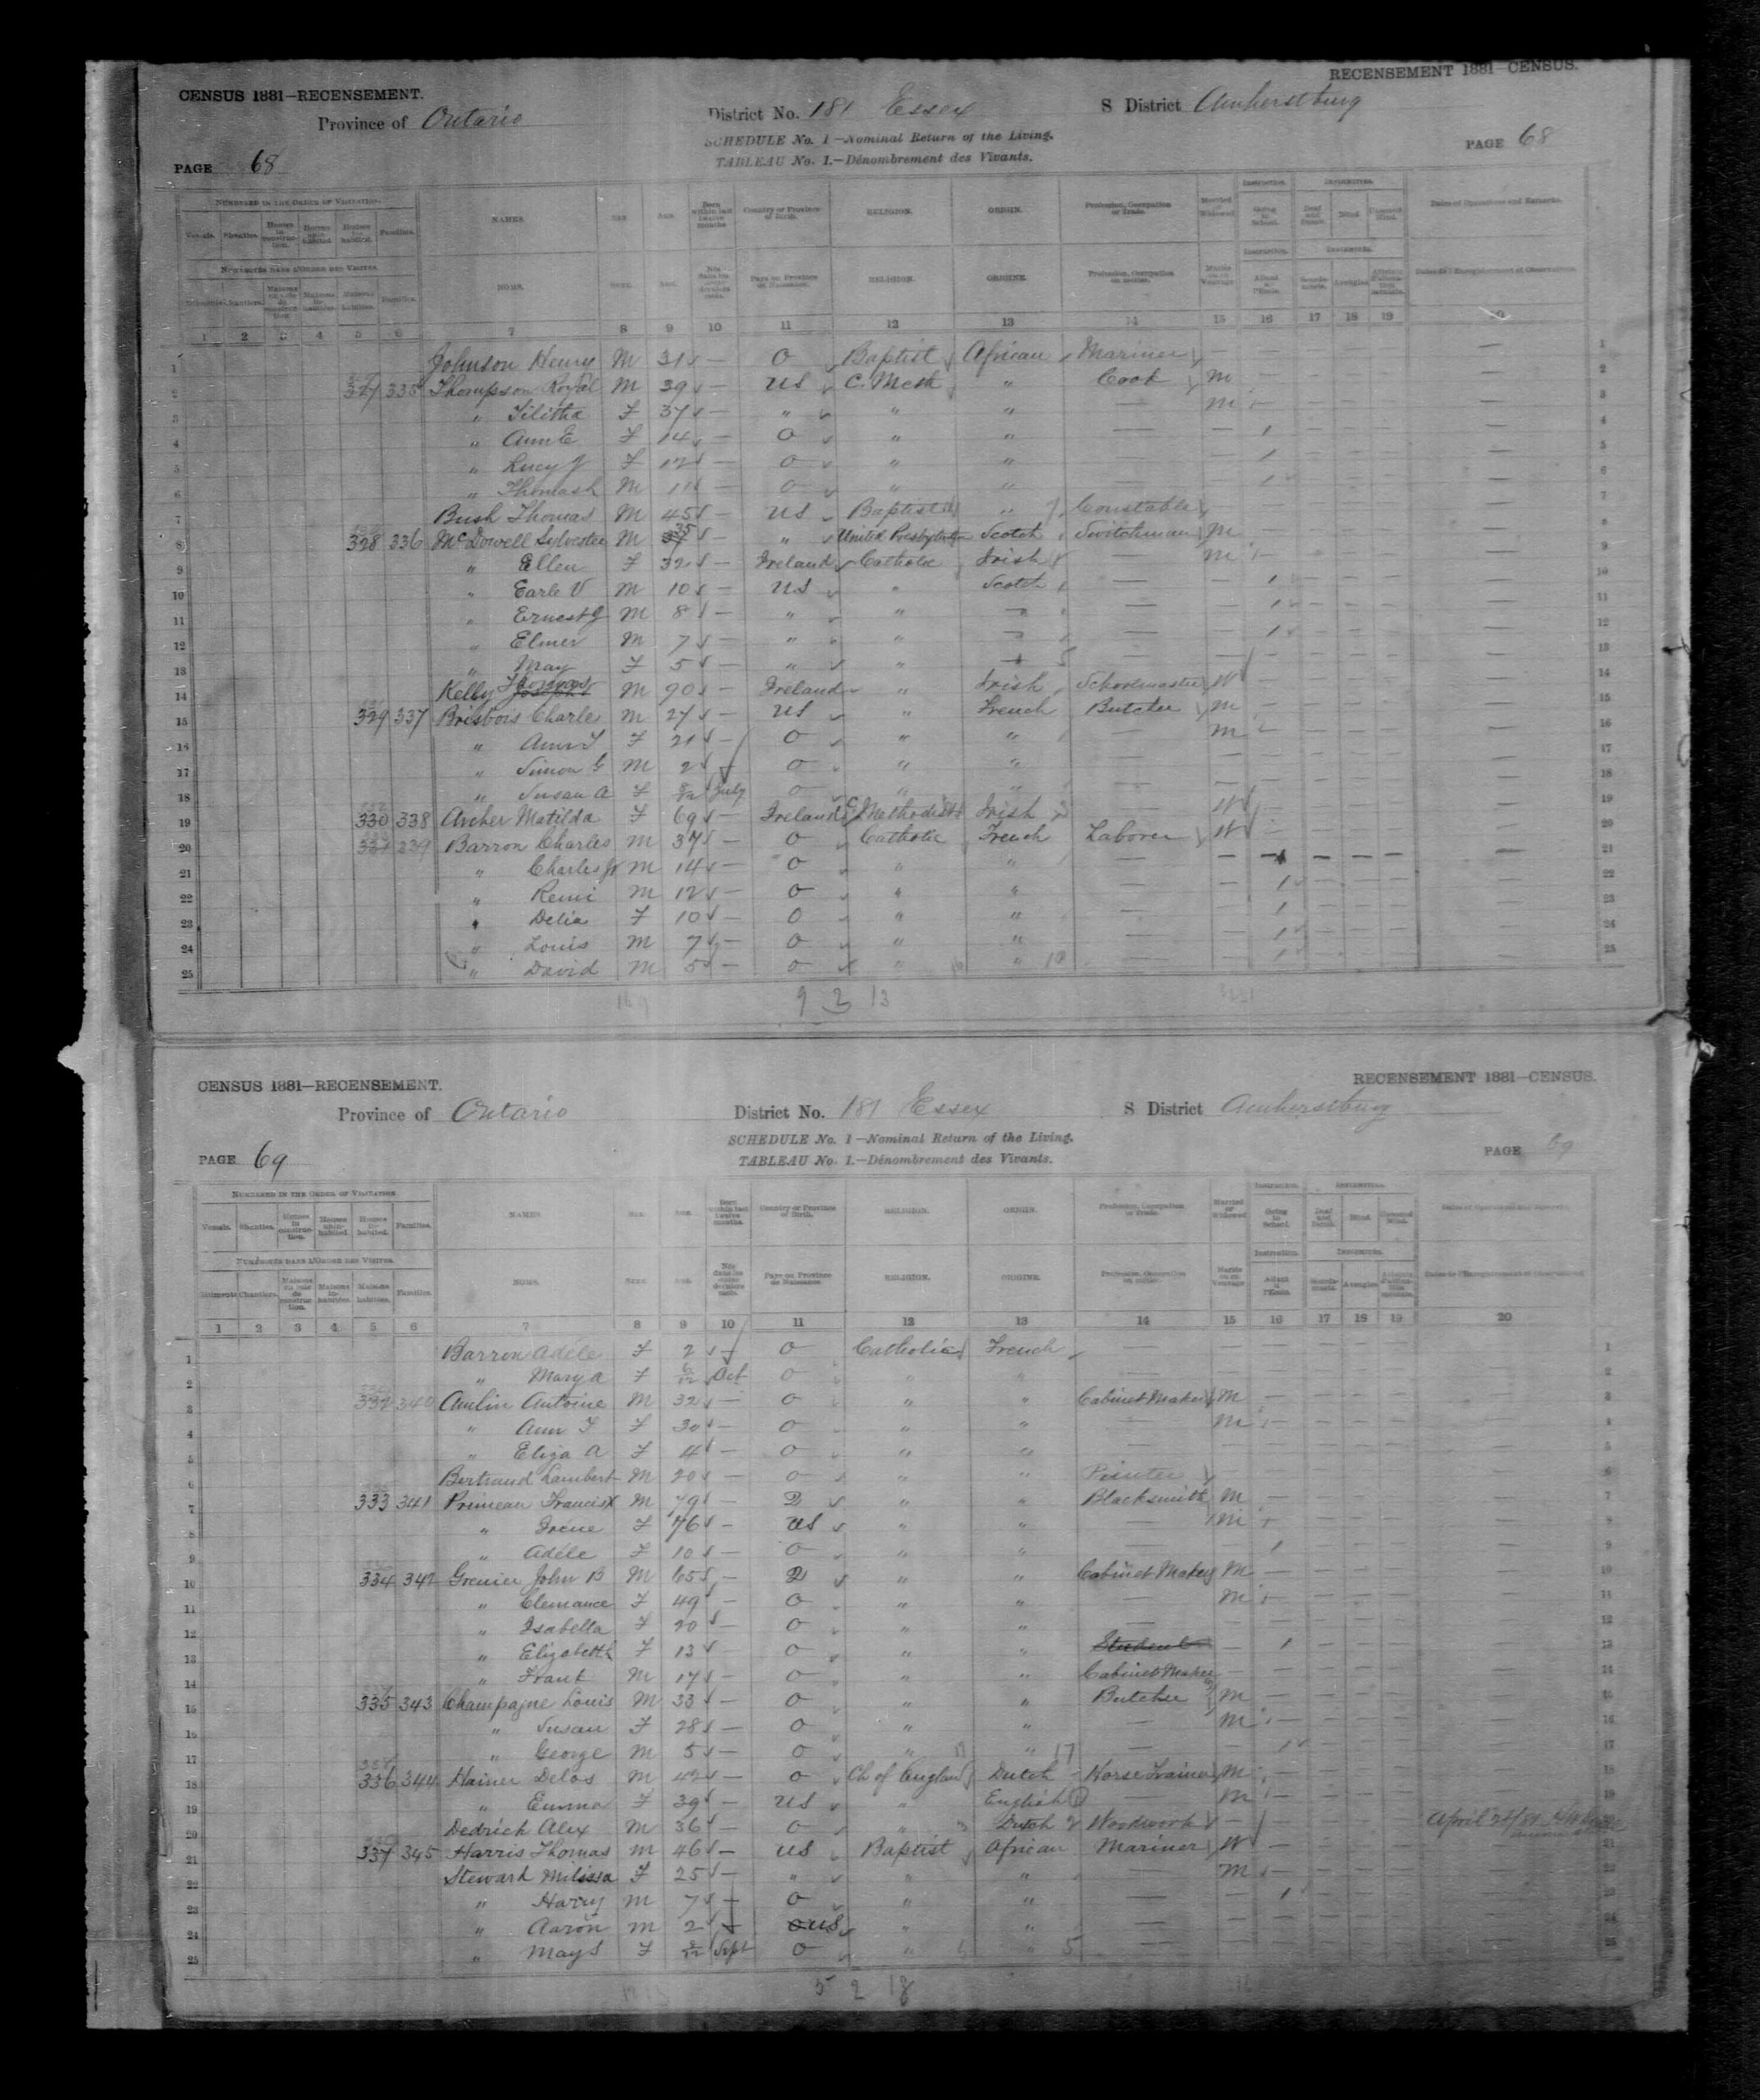 WEEK 1 - 1881 Census for Royal Thompson, also lists Thomas Bush